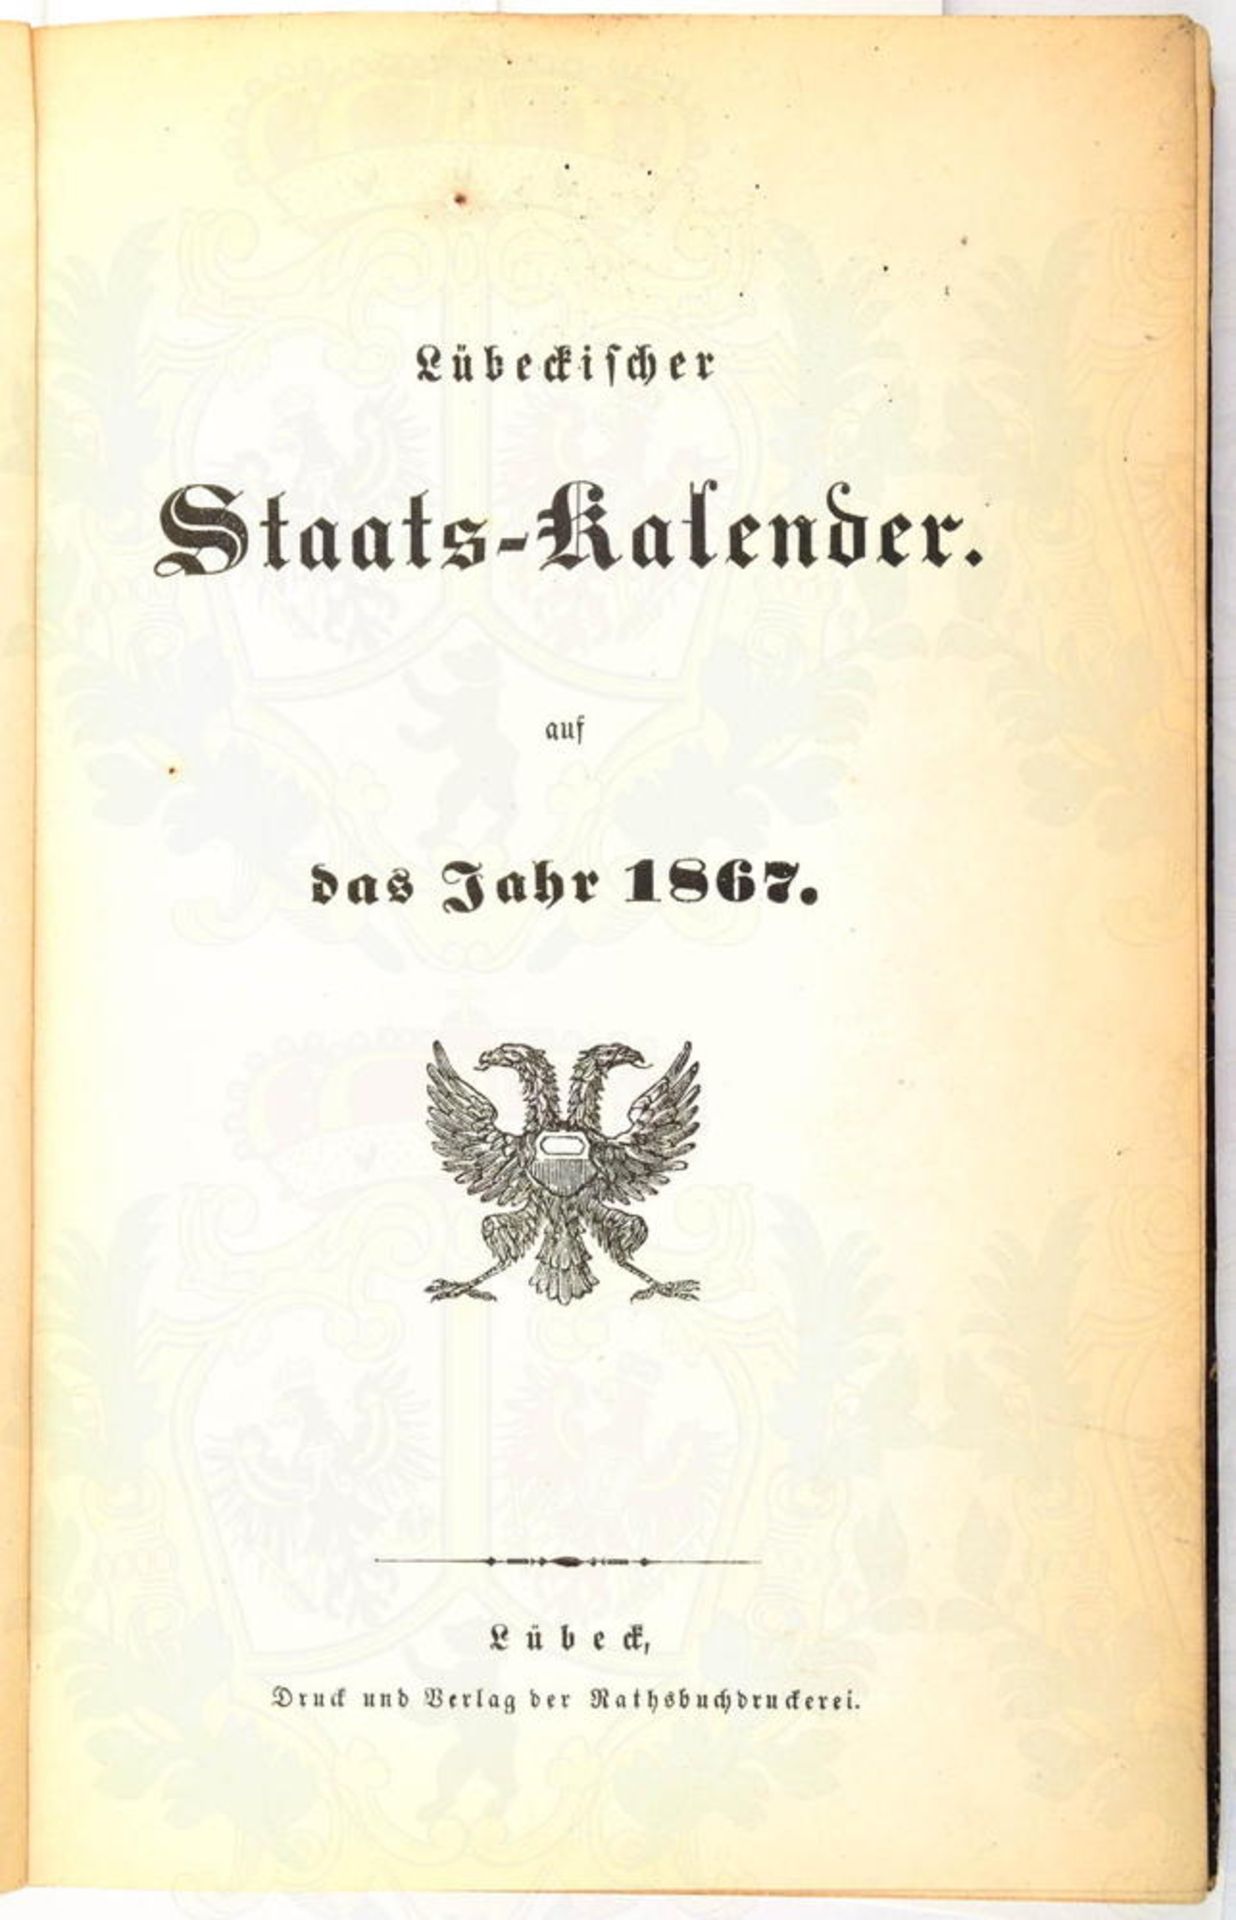 LÜBECKISCHER STAATS-KALENDER 1867